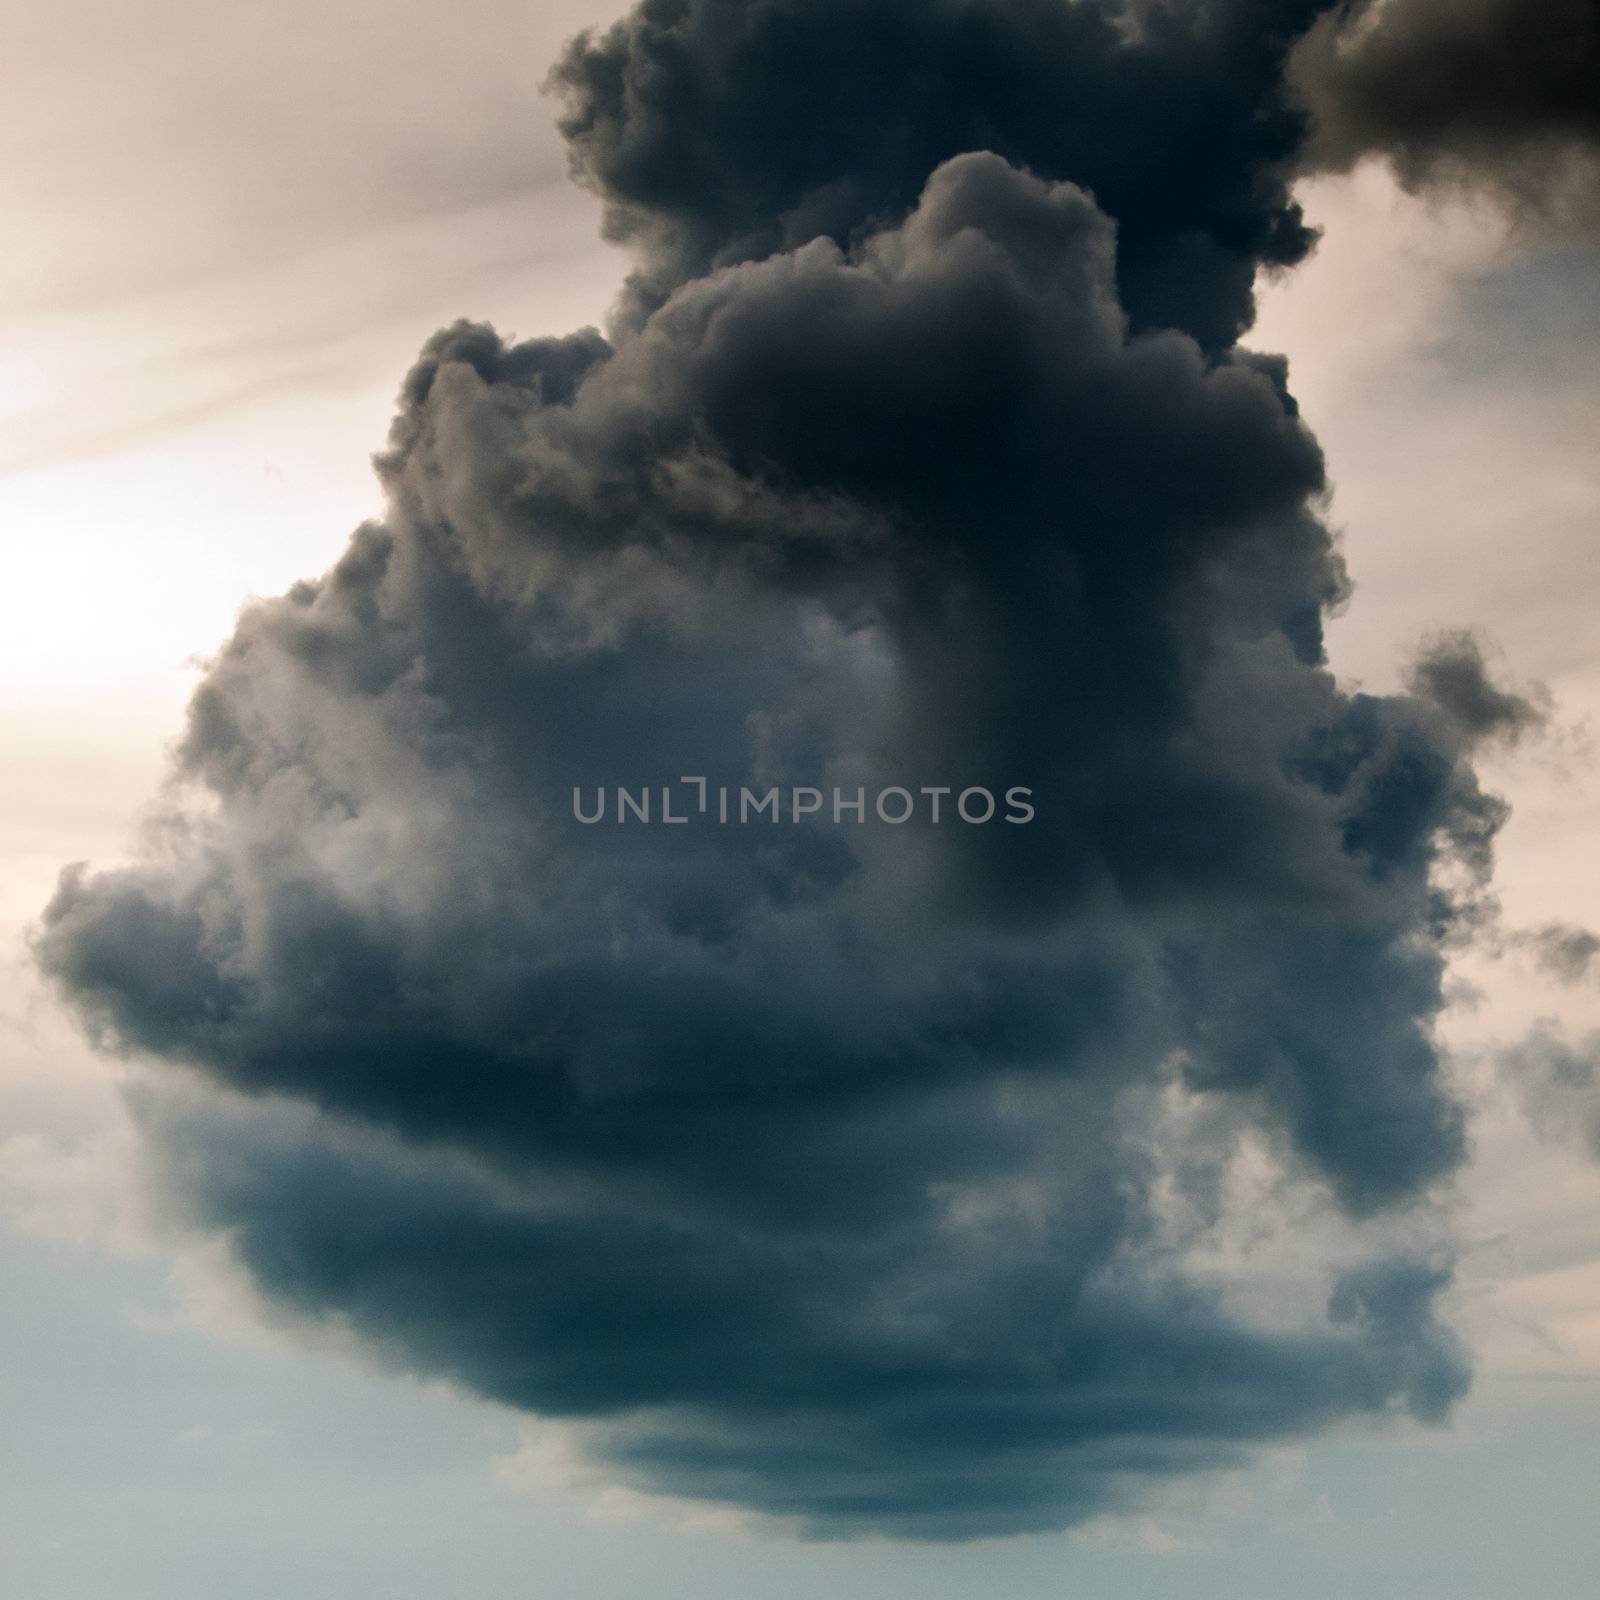 The dark cloud by jakgree